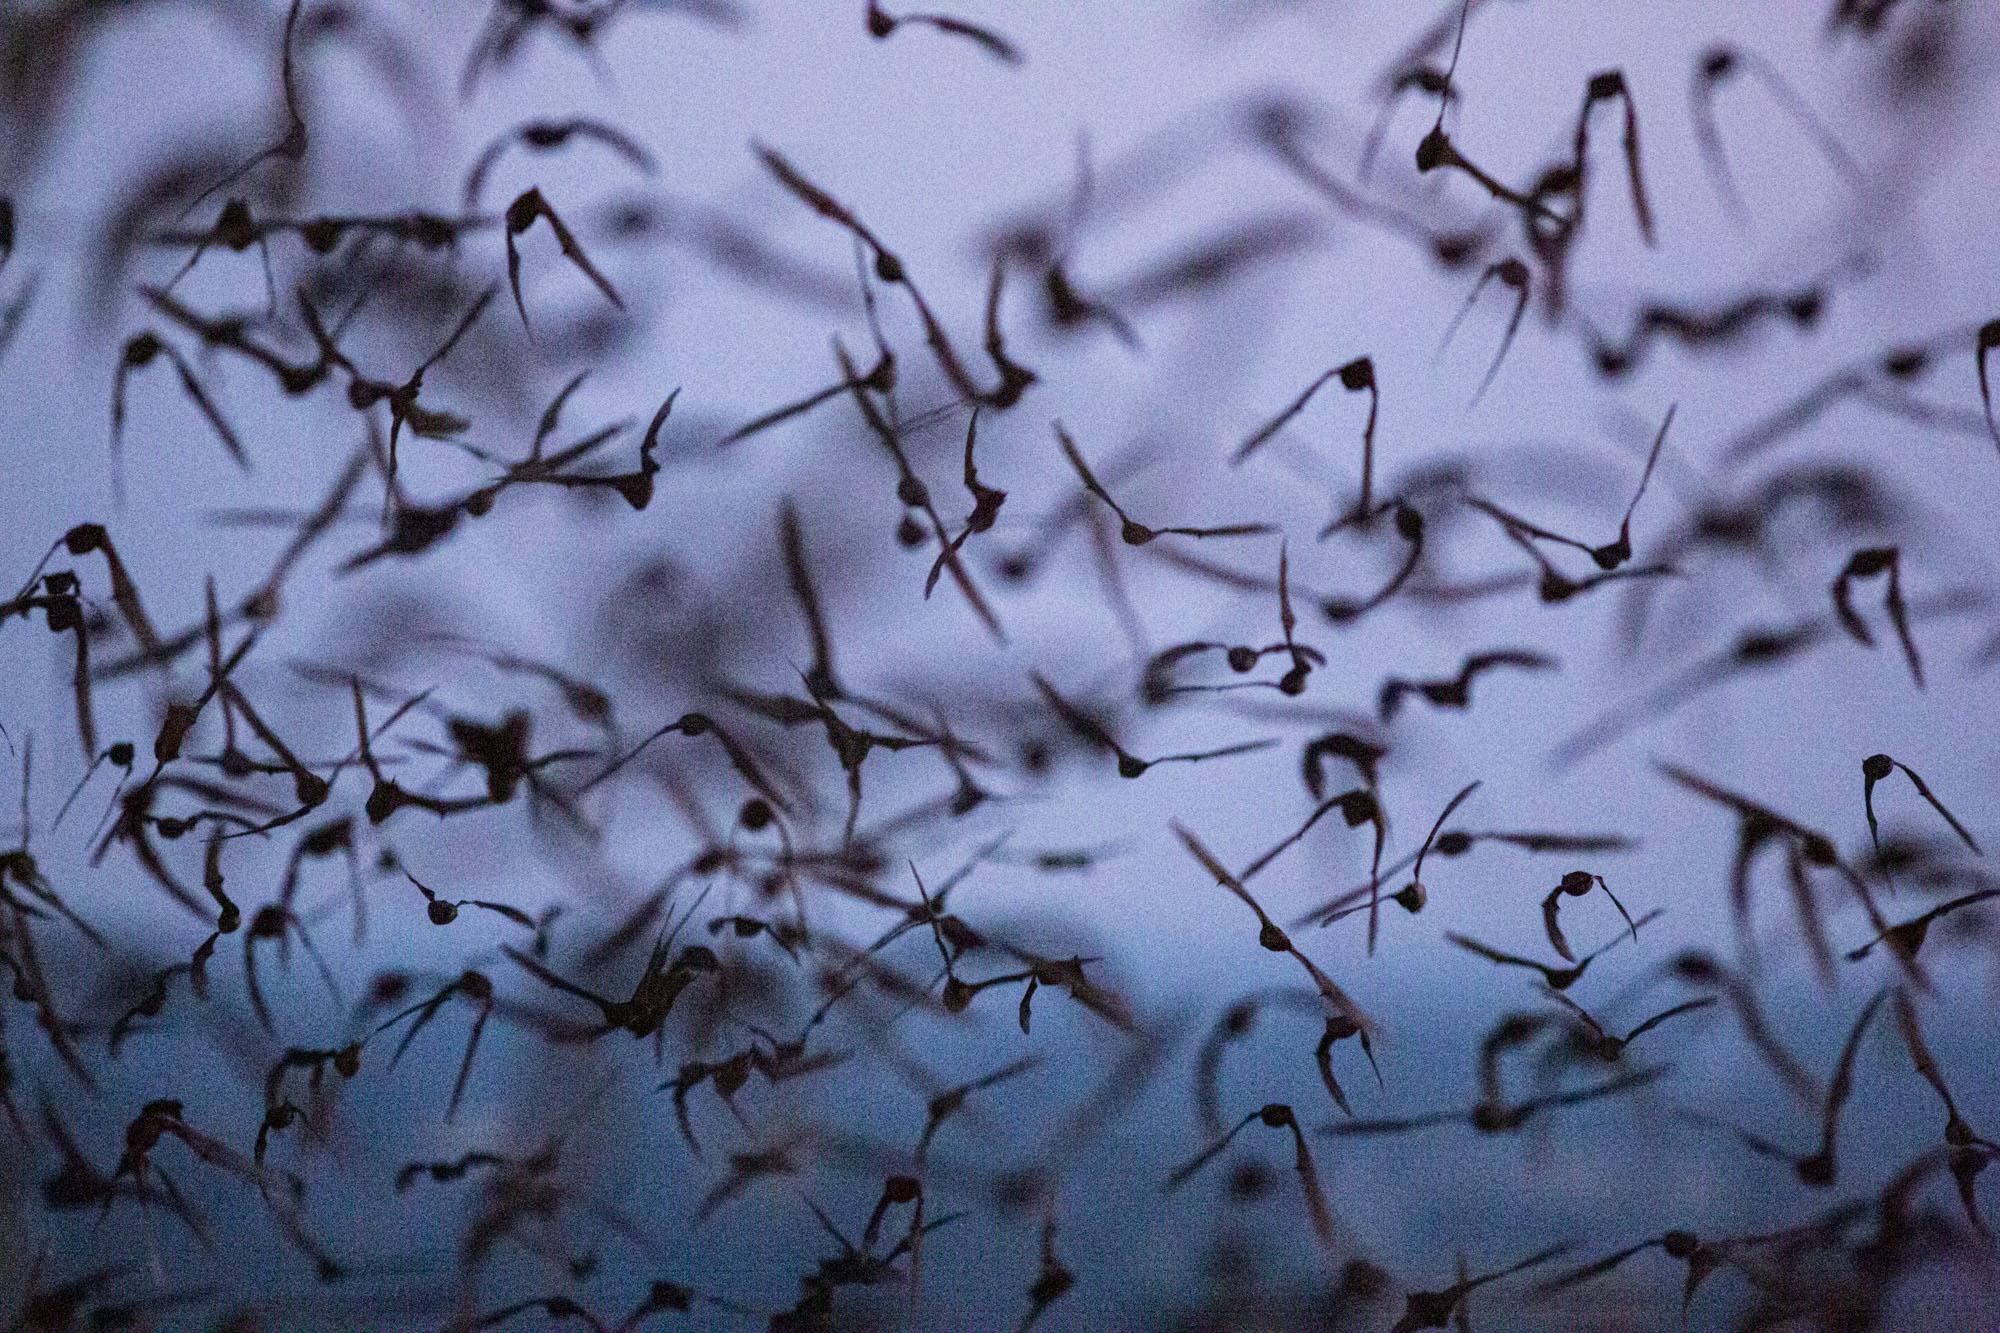 Origins, Understanding Covid-19: Bloomberg - Thousands of bats fly through the evening light near the...